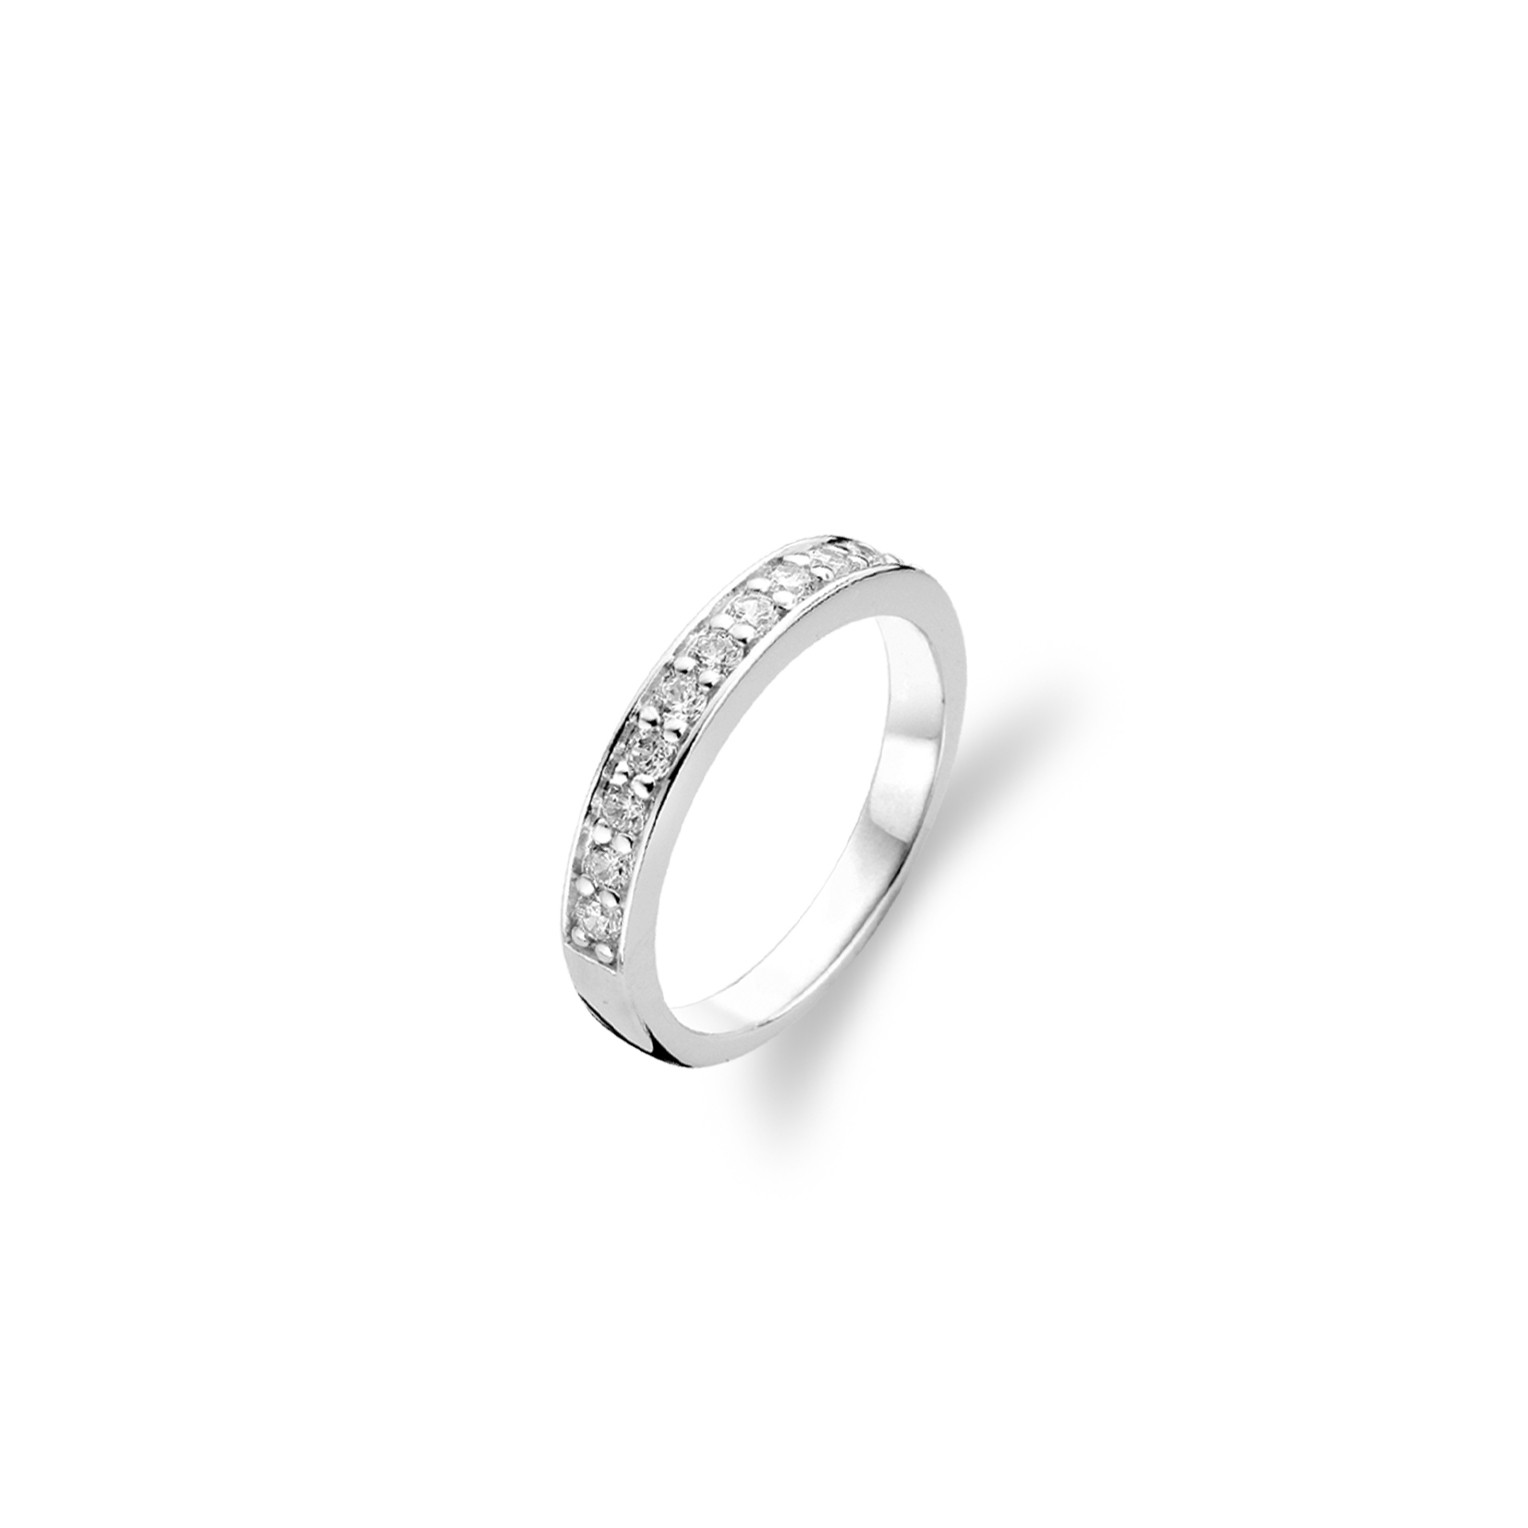 TI SENTO - Milano Ring 1151ZI Gala Jewelers Inc. White Oak, PA